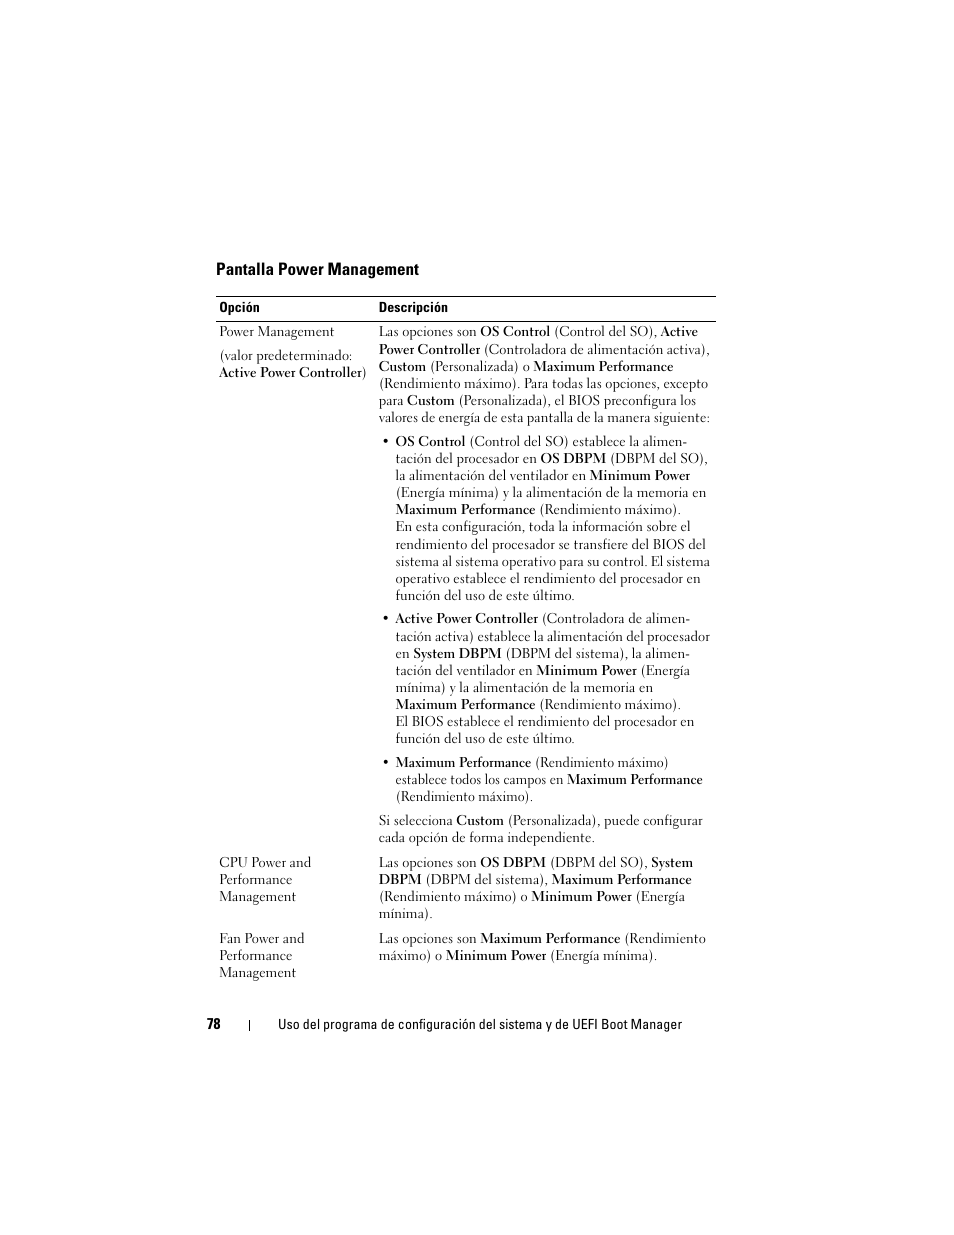 Pantalla power management | Dell PowerEdge R815 Manual del usuario | Página 78 / 224